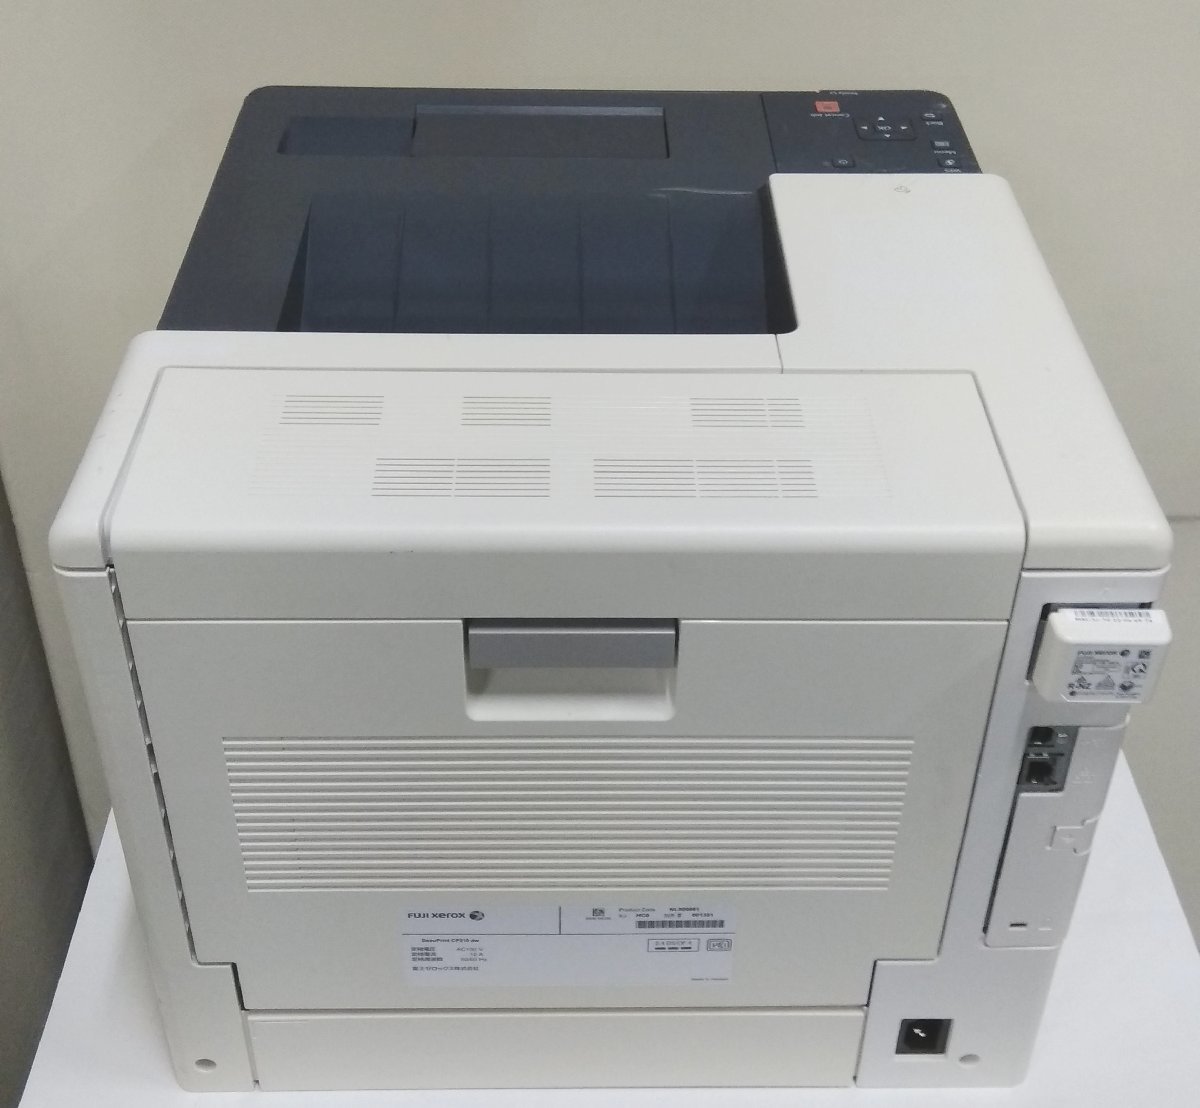 [ Saitama departure ][FUJIFILM( old Xerox)]A4 color laser printer -DocuPrint CP210 dw * counter 6833 sheets (11-2763)